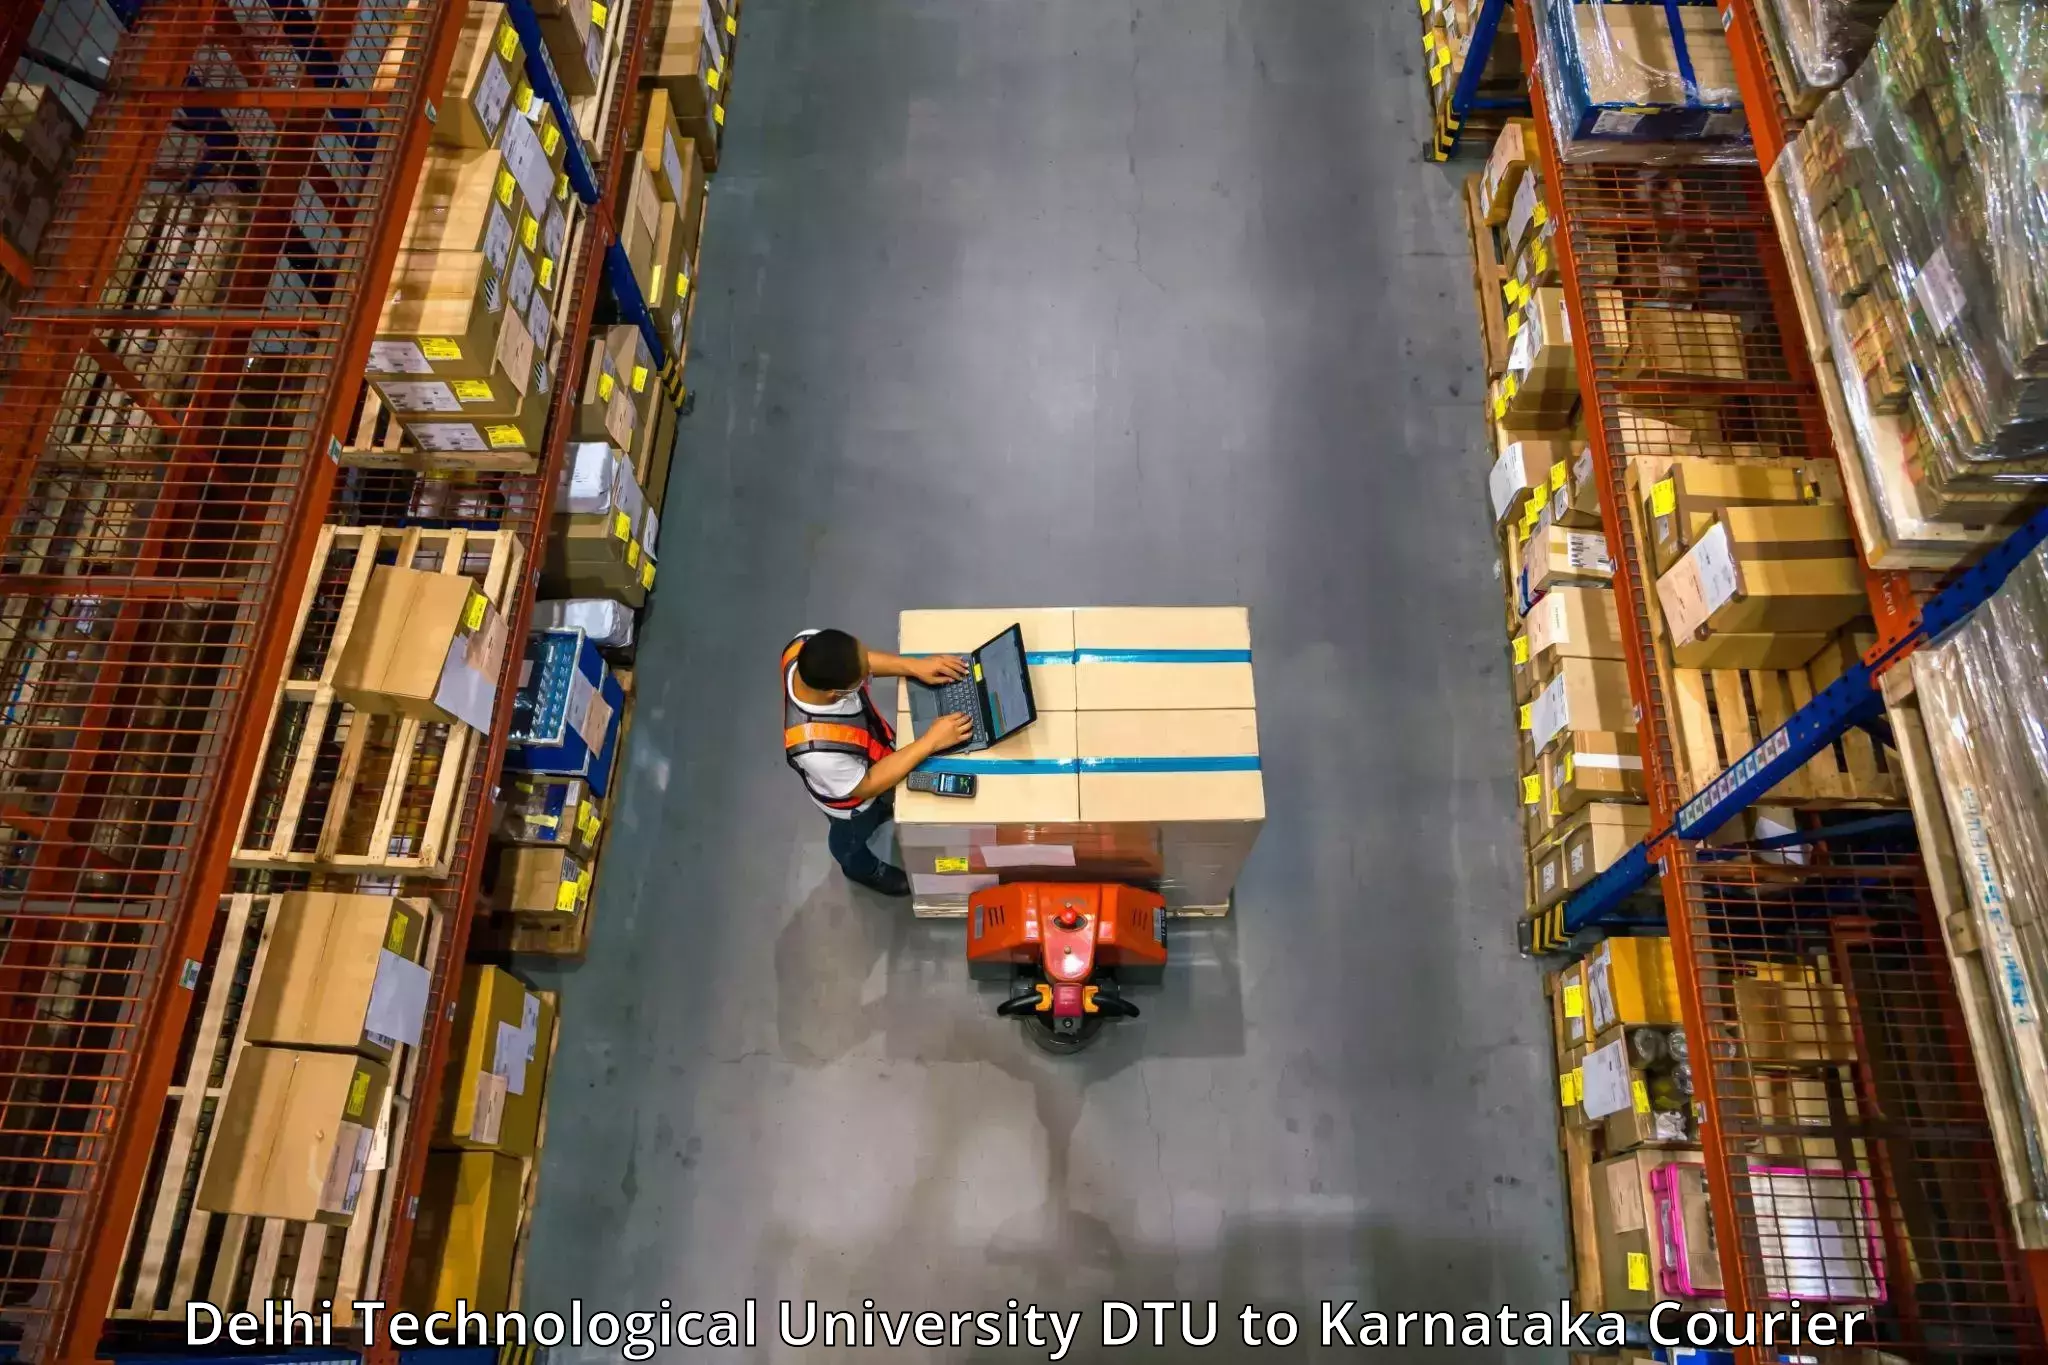 Specialized moving company Delhi Technological University DTU to Kalasa